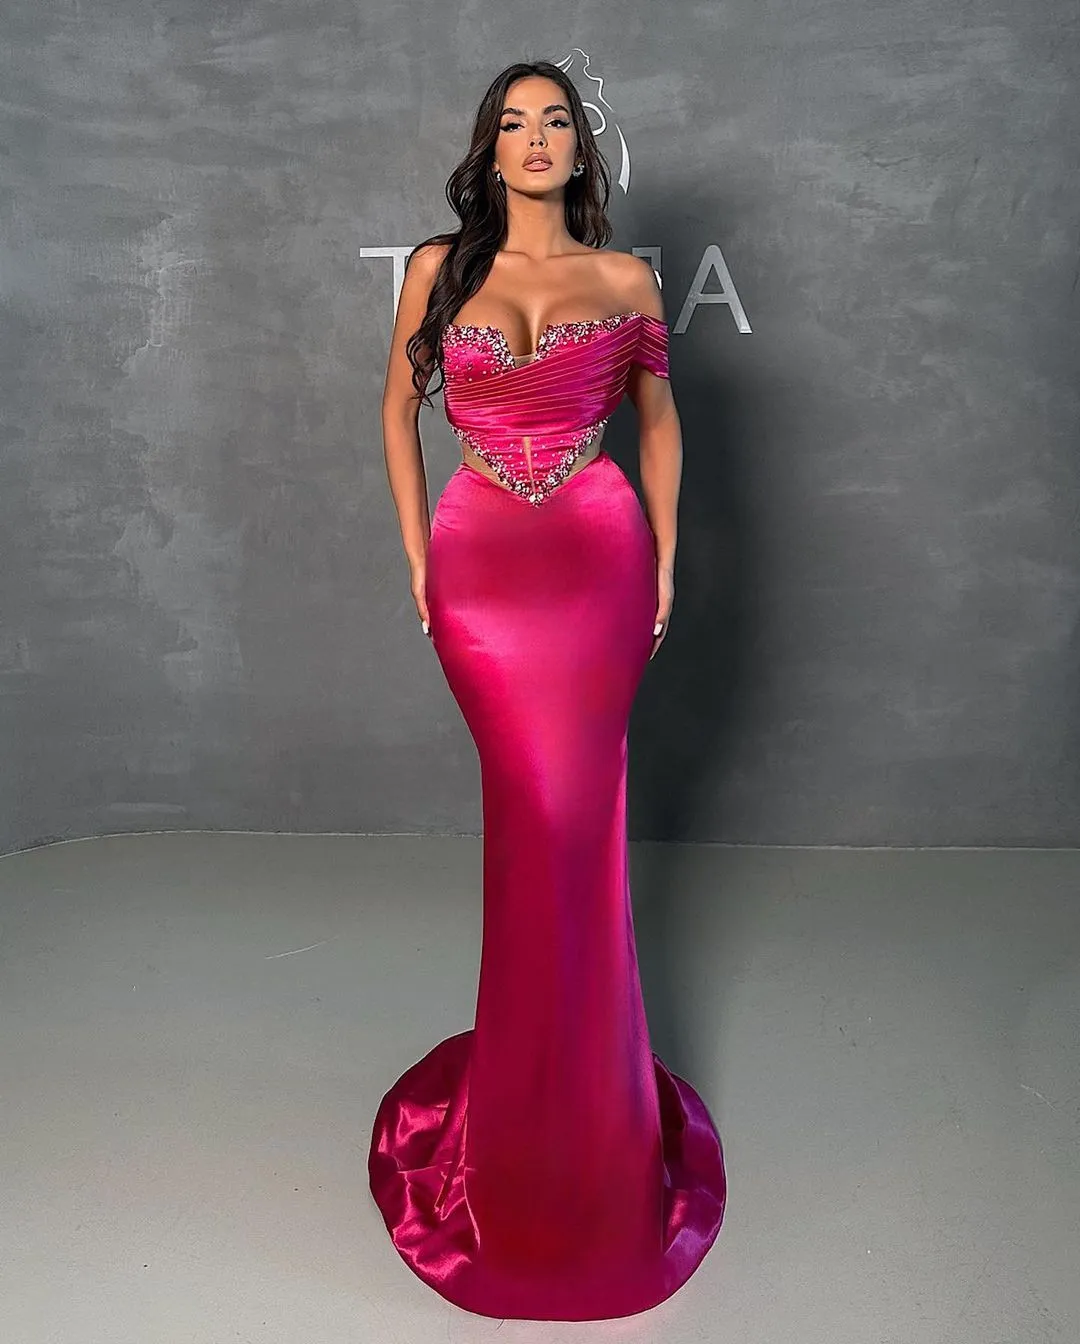 Dubai árabe quente rosa quente vestidos de noite de bainha de um ombro frisado lantejoulas Coutout roupa formal vestido de festa concurso noivado vestidos de noite de celebridades